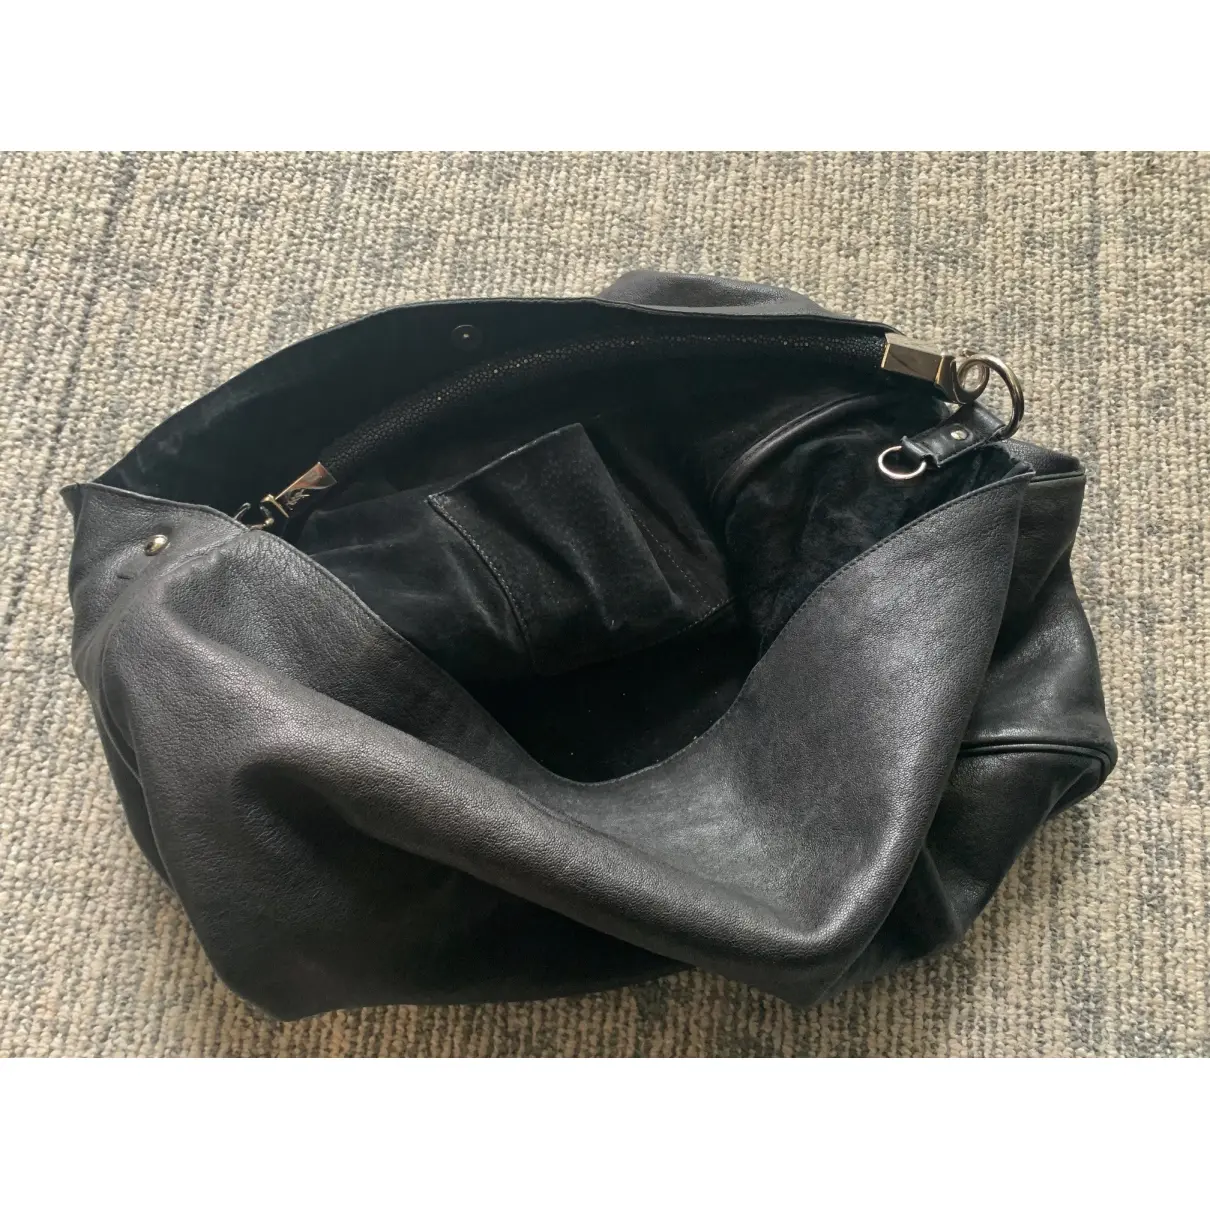 Teddy leather handbag Saint Laurent